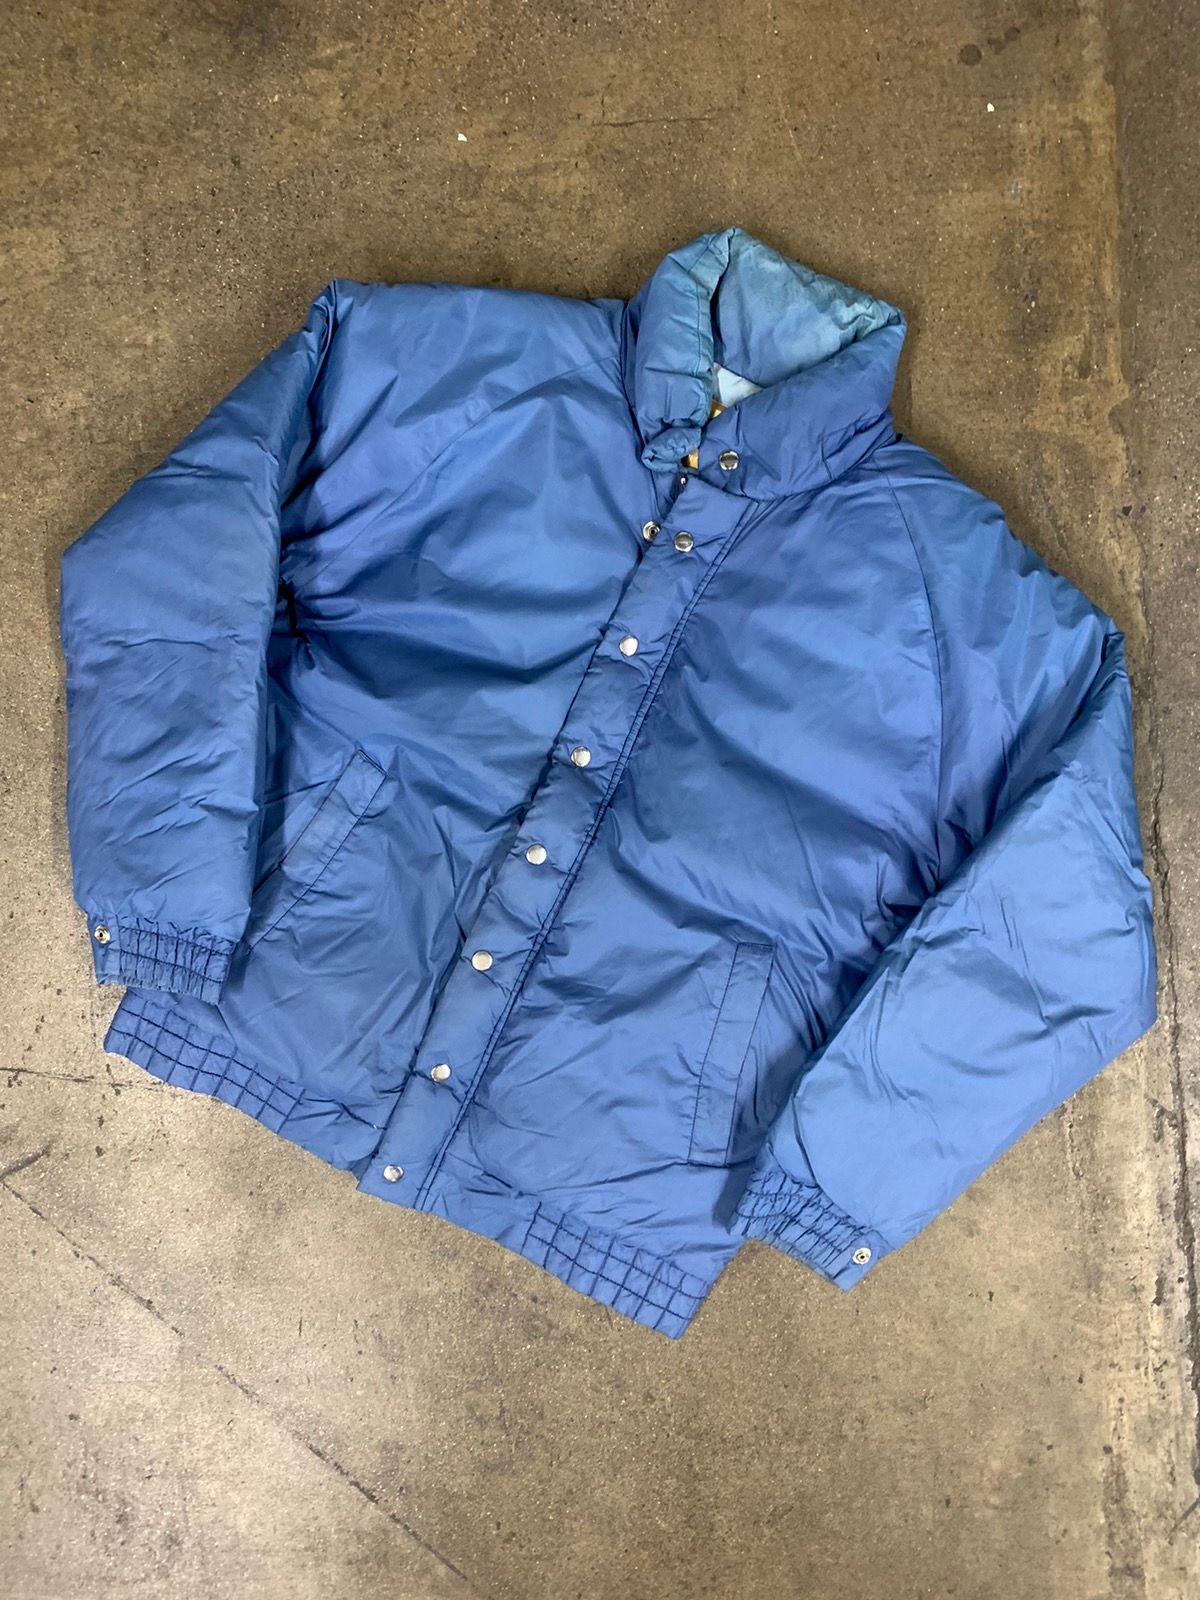 Vintage Vintage REI Gore-Tex Down Jacket | Grailed